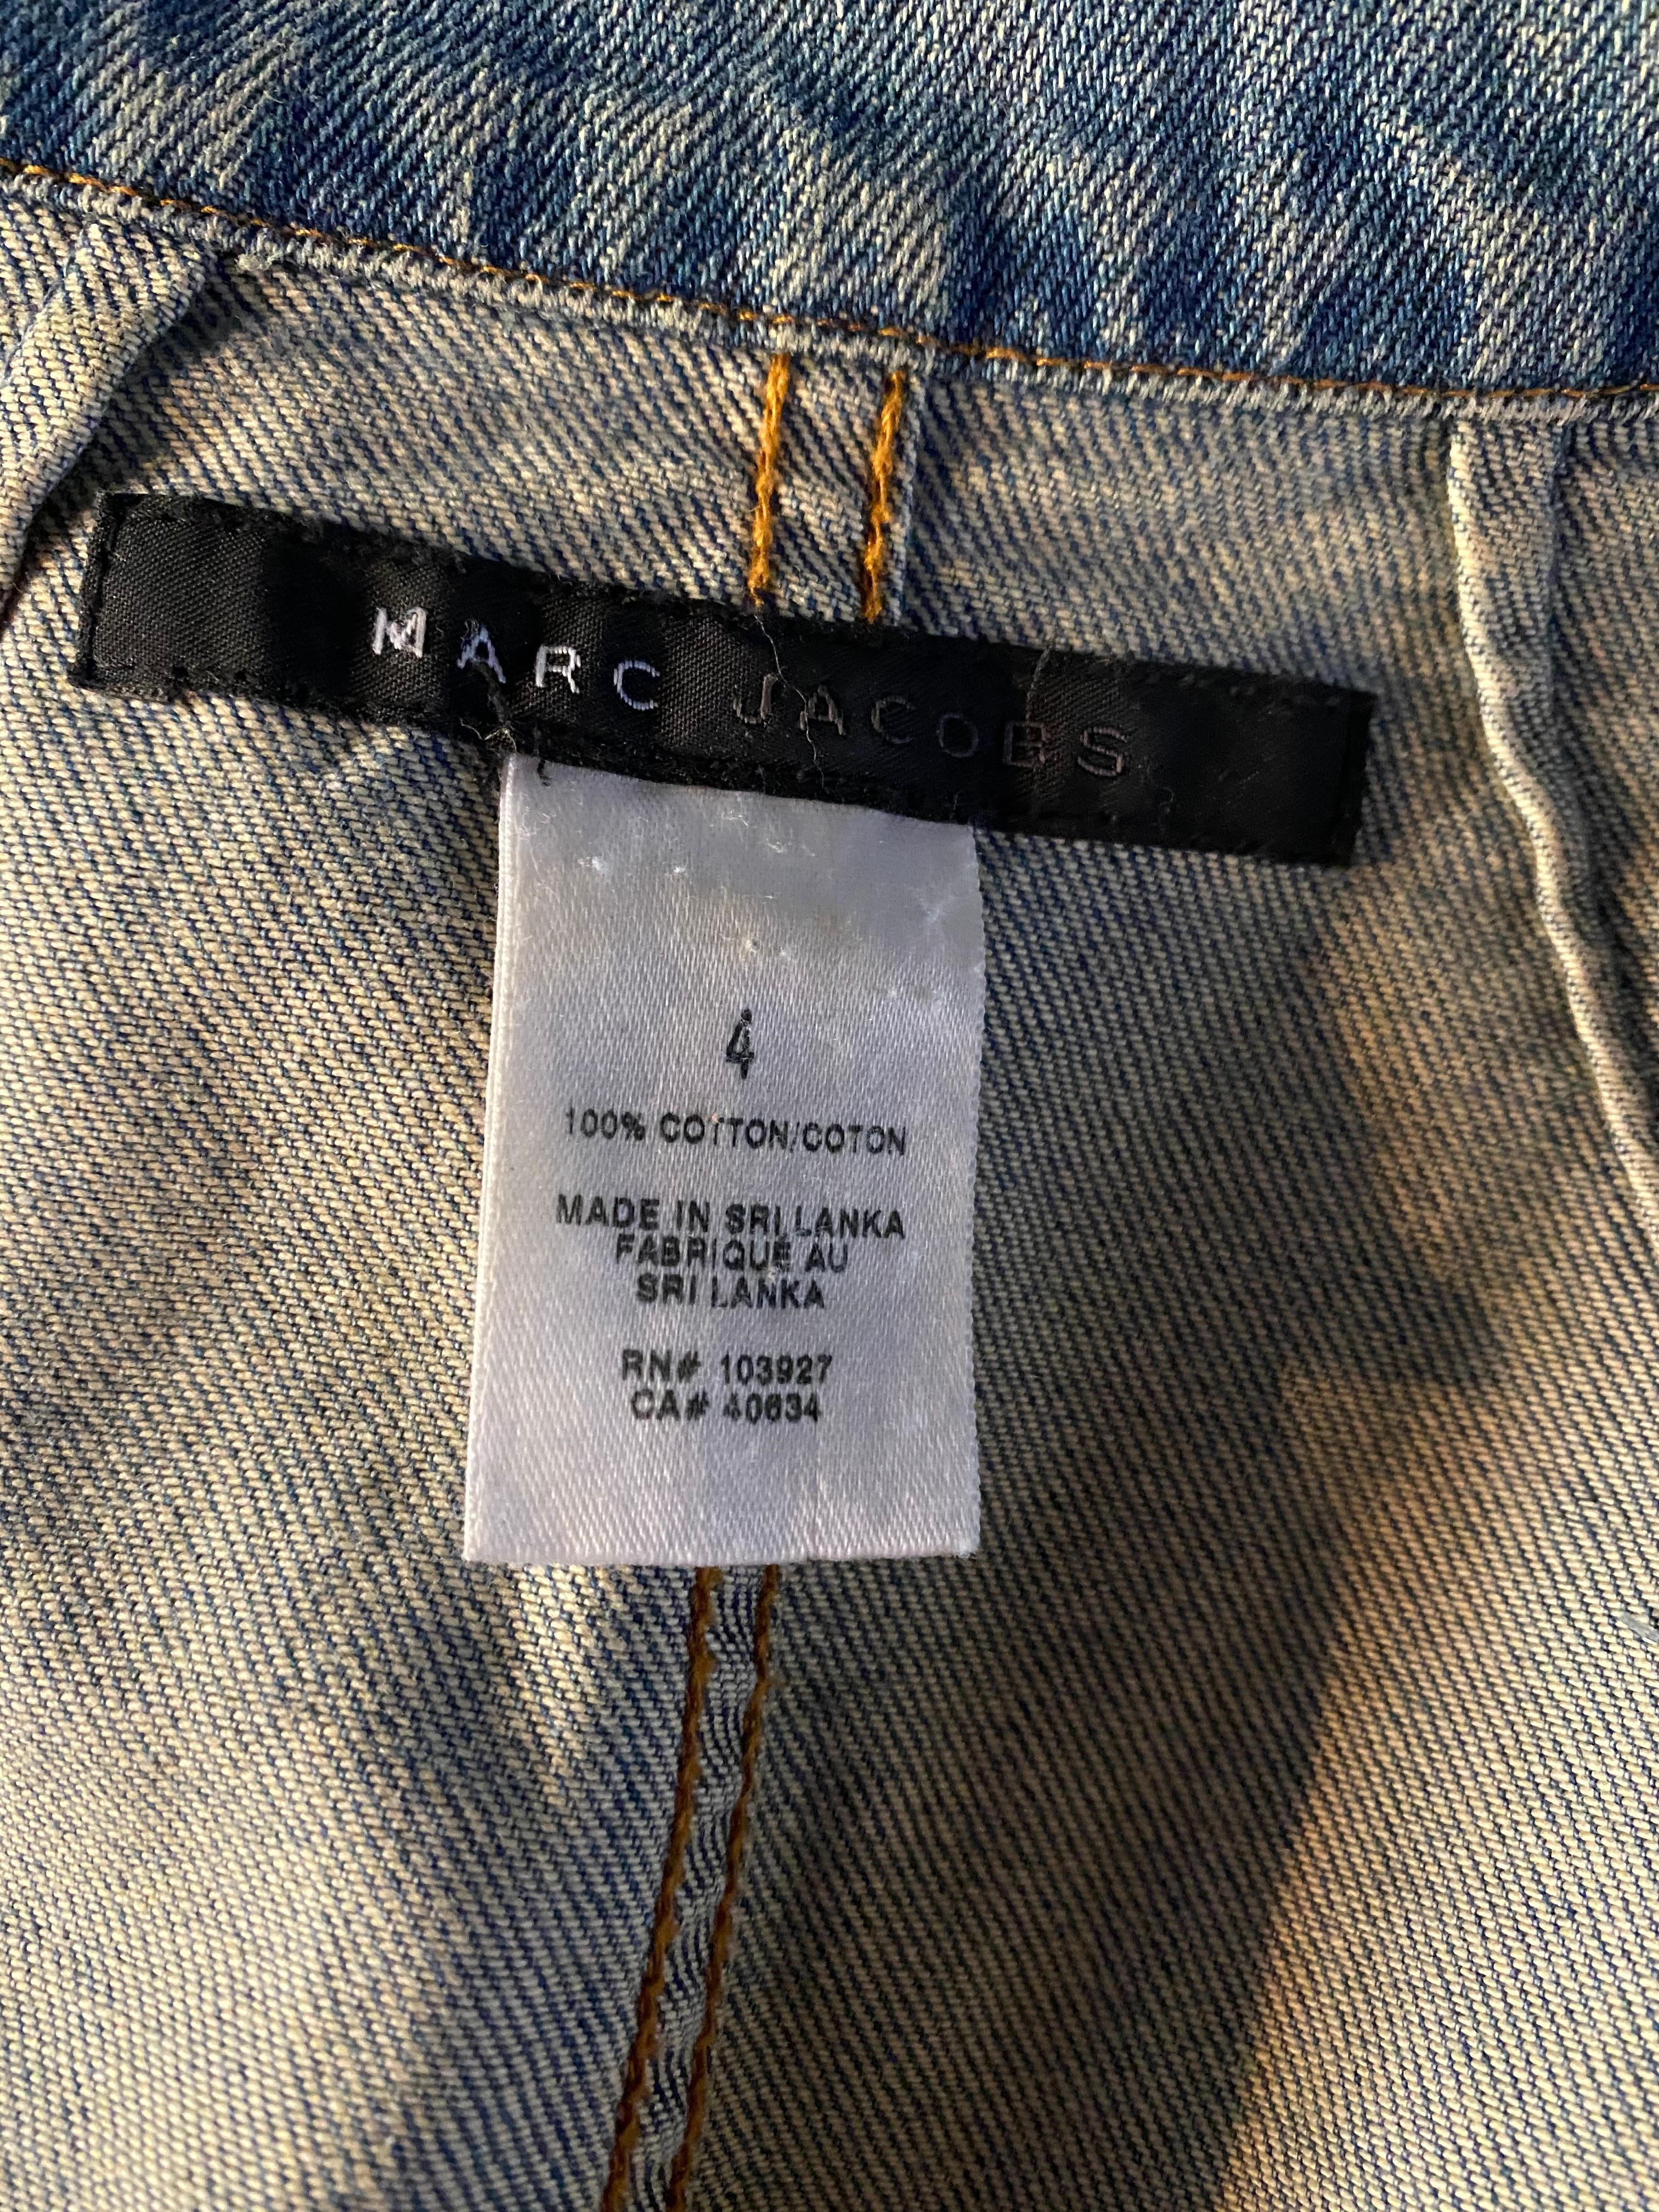 Women's Marc Jacobs Denim Jacket, Size 4